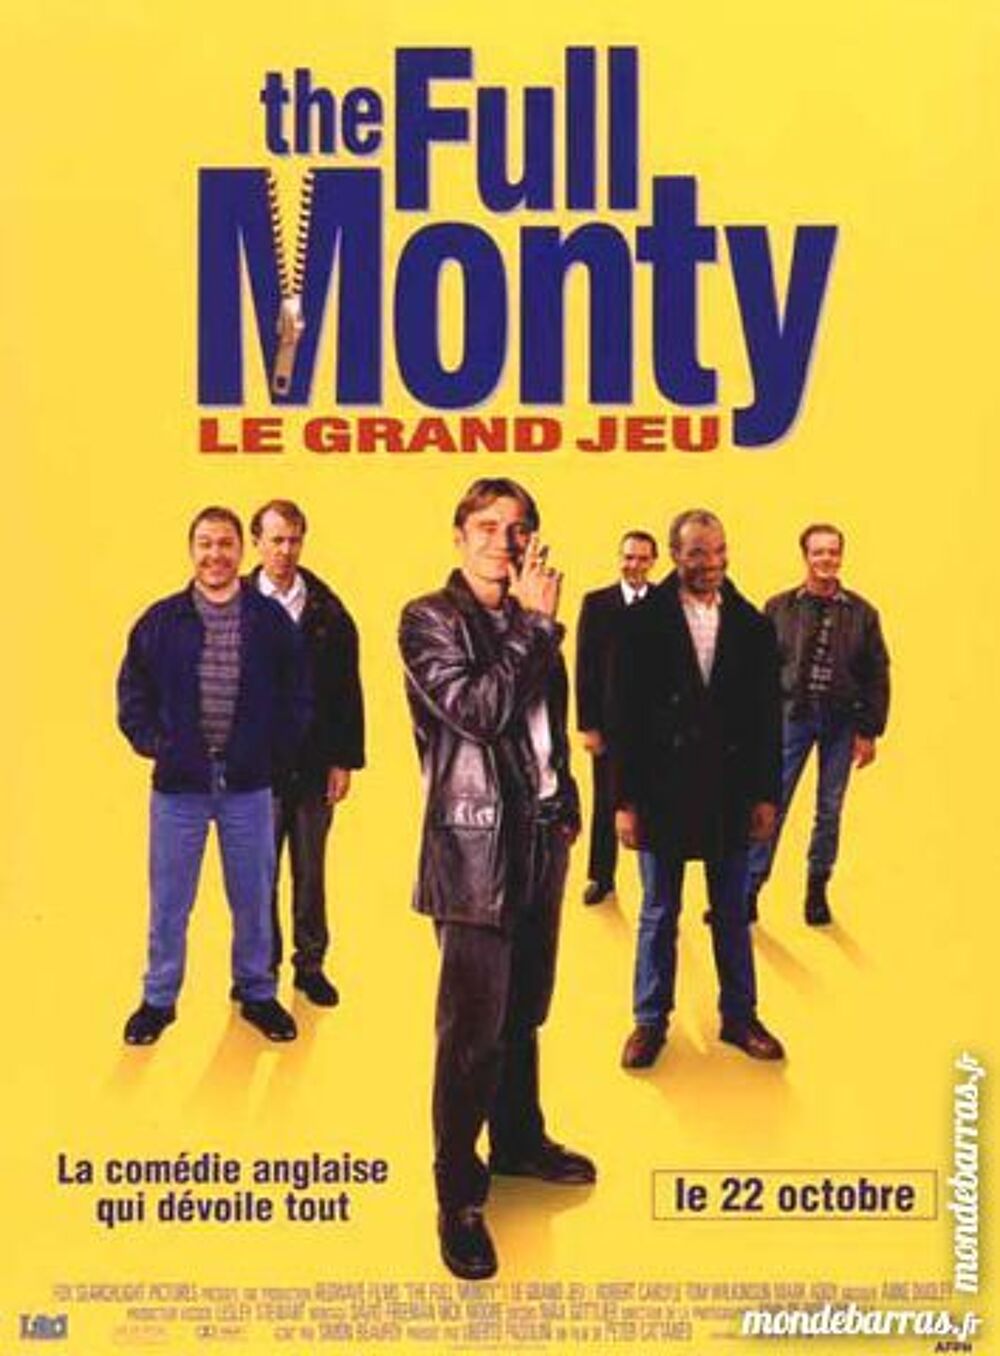 K7 Vhs: The Full Monty - Le Grand jeu (527) DVD et blu-ray